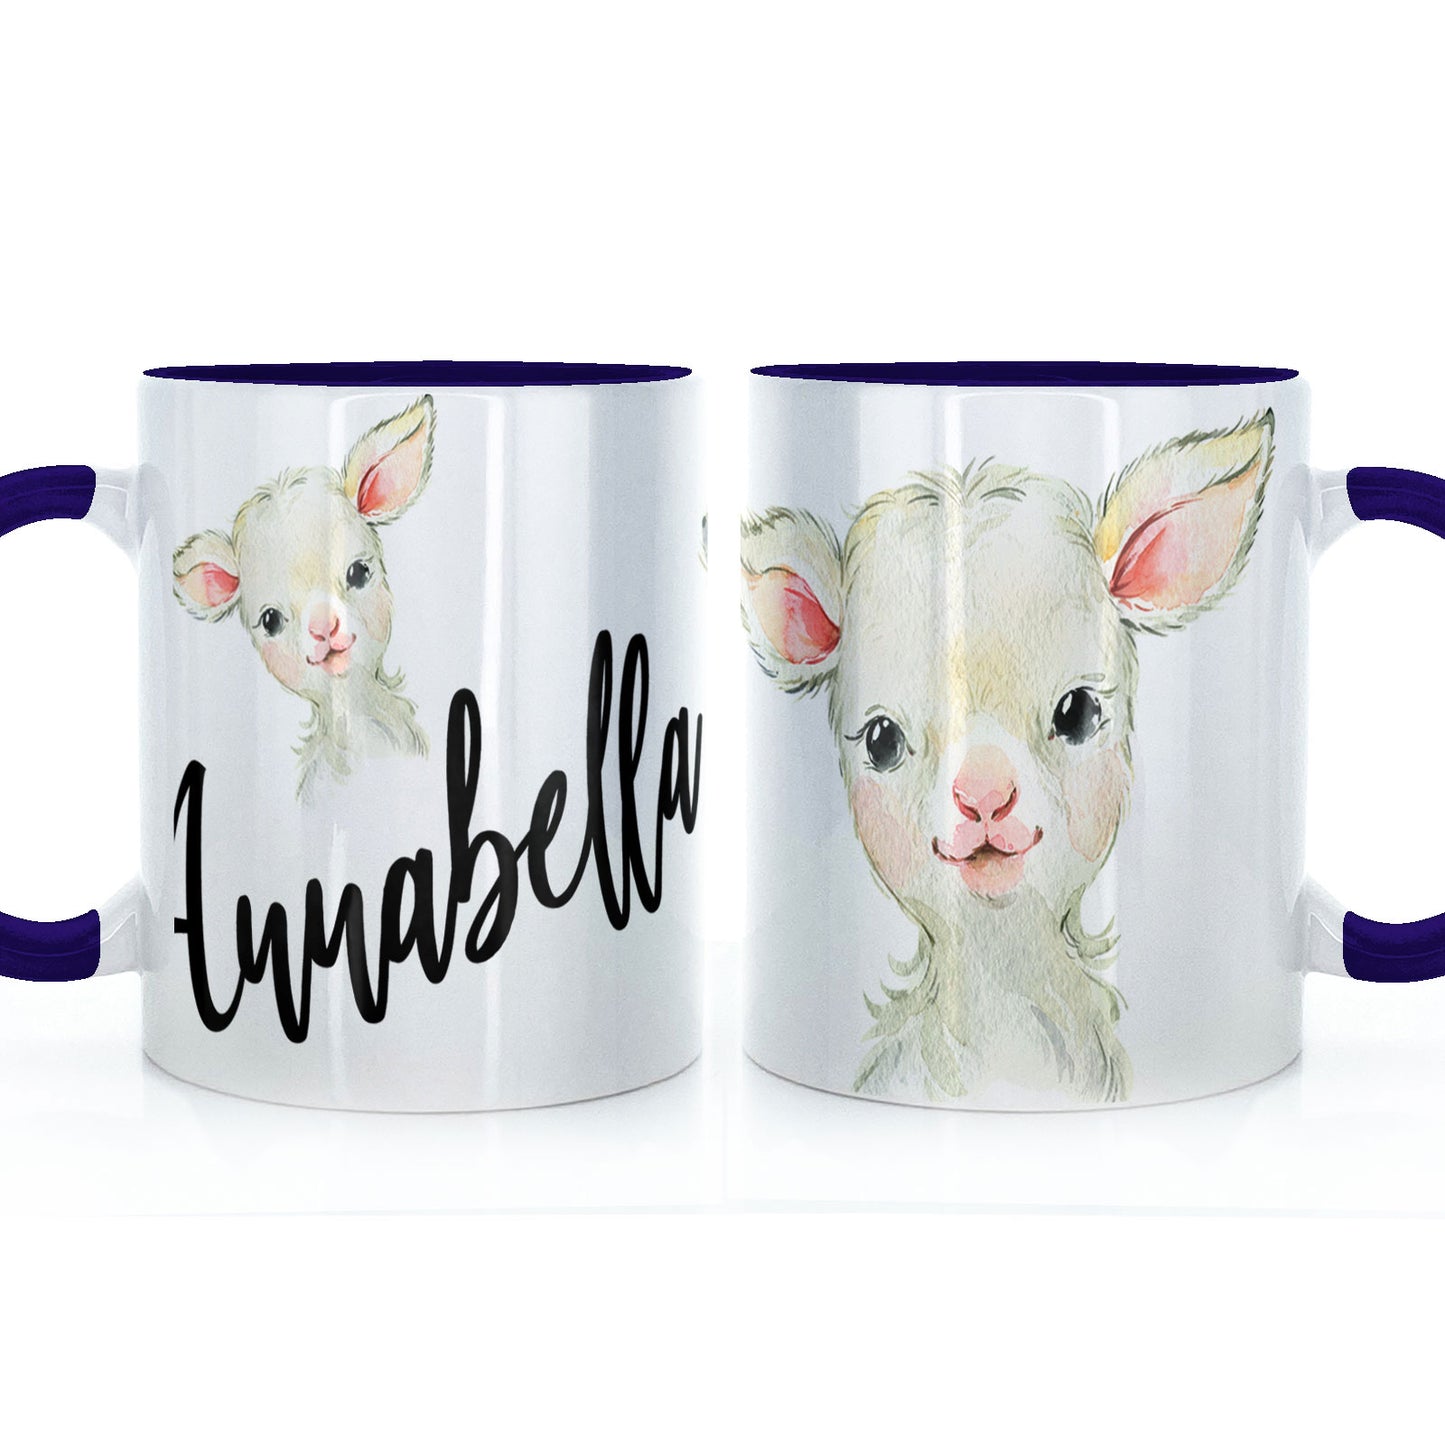 Personalised Mug with Stylish Text and Cute Lamb